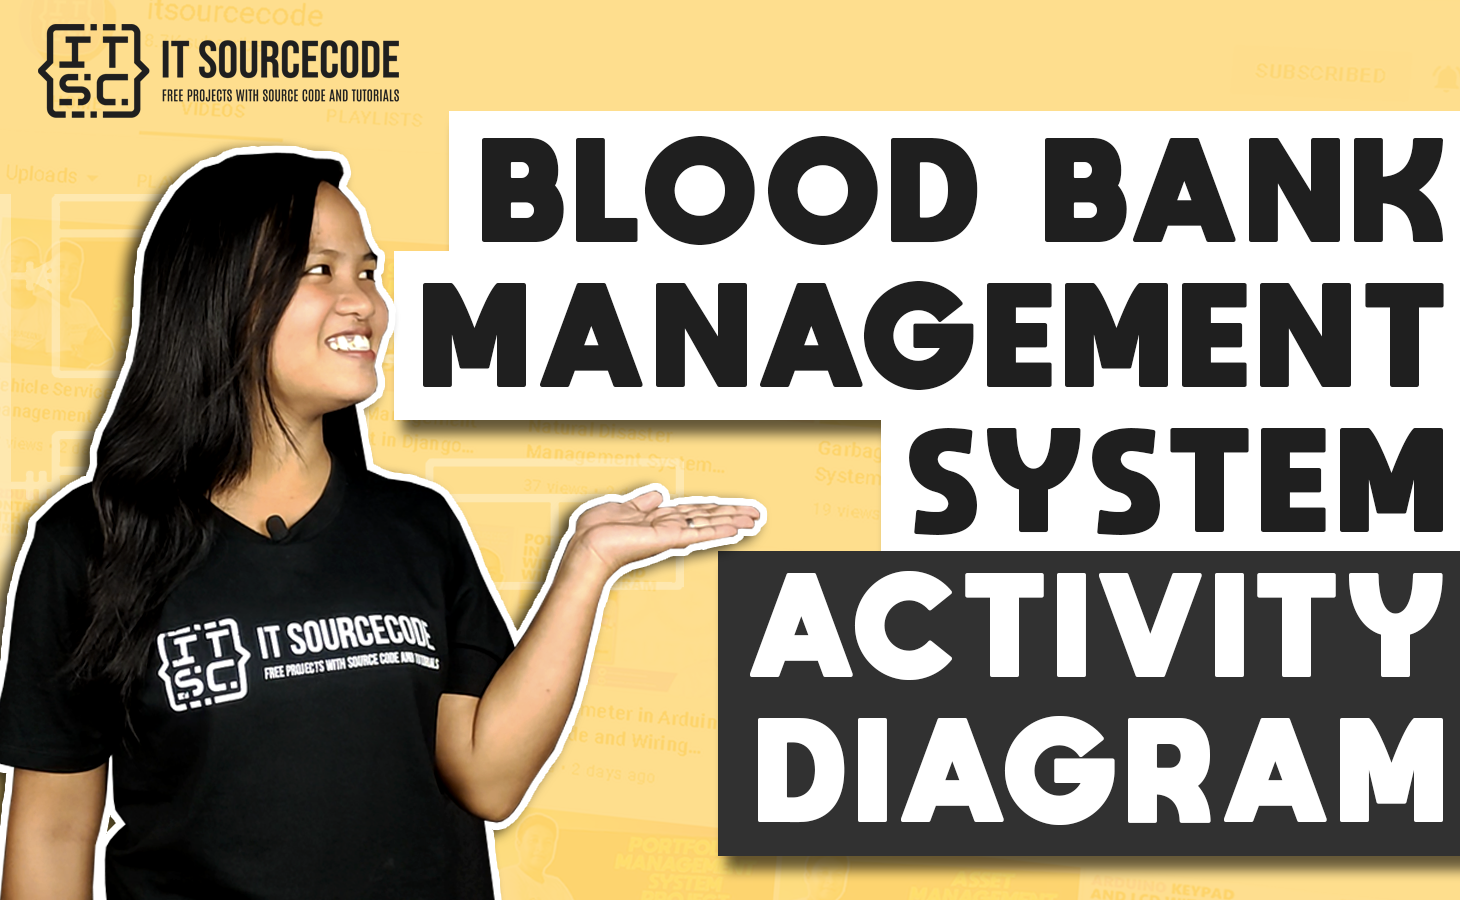 Activity Diagram For Blood Bank Management System